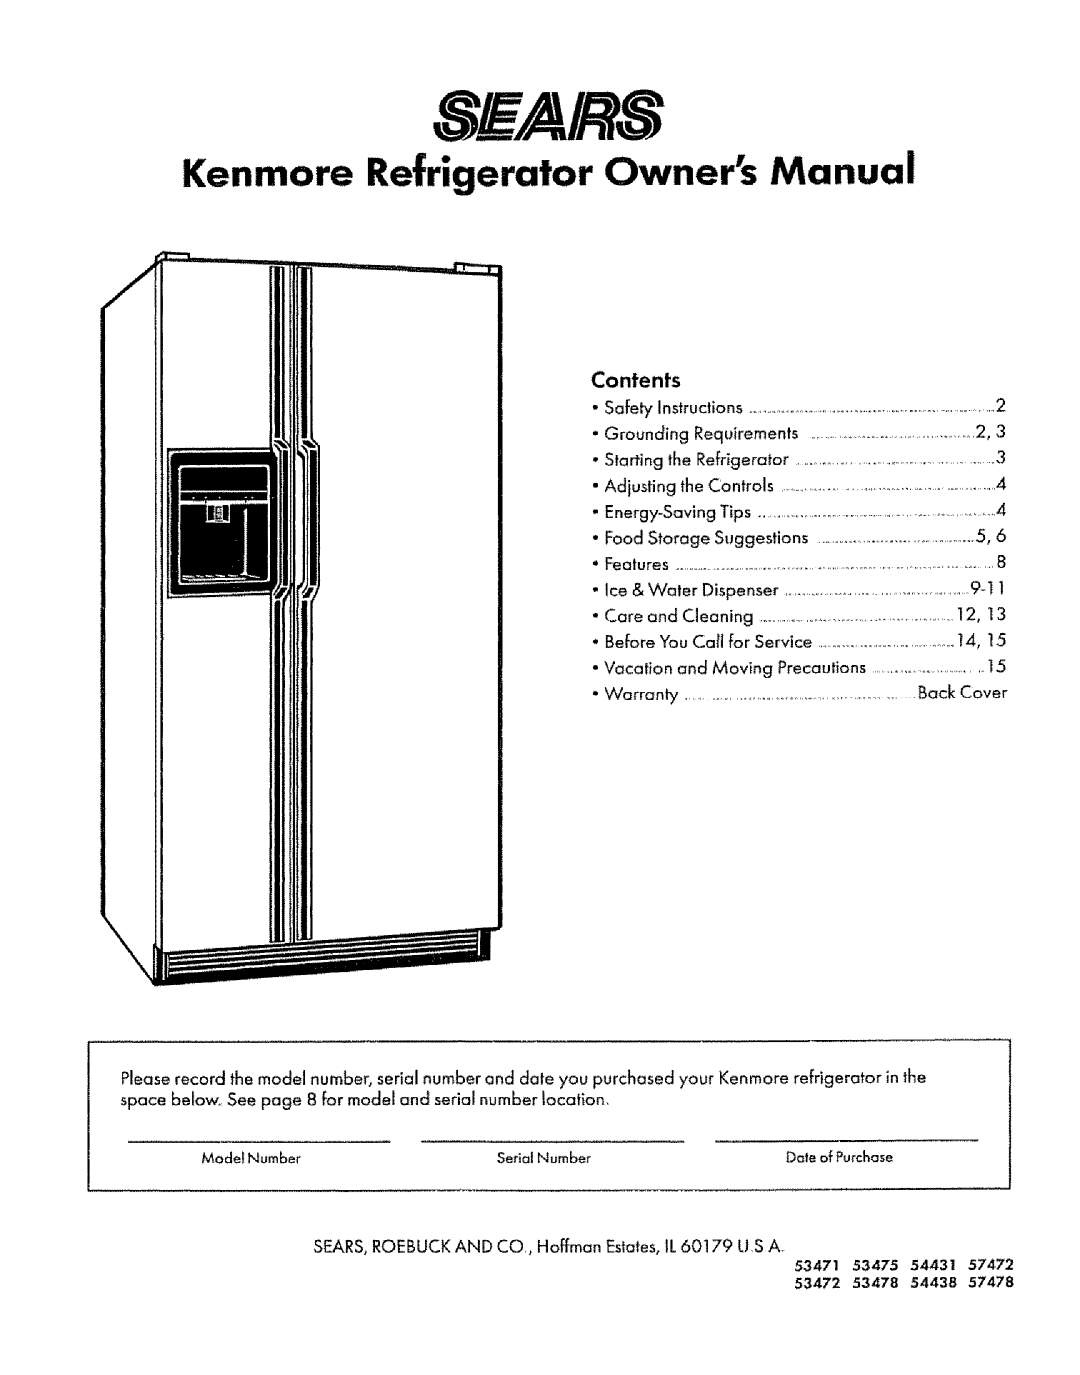 Sears 53472, 57472, 53478, 53475, 57478, 54438, 54431, 53471 manual Sears, Kenmore Refrigerator Owner Manual, Contents 